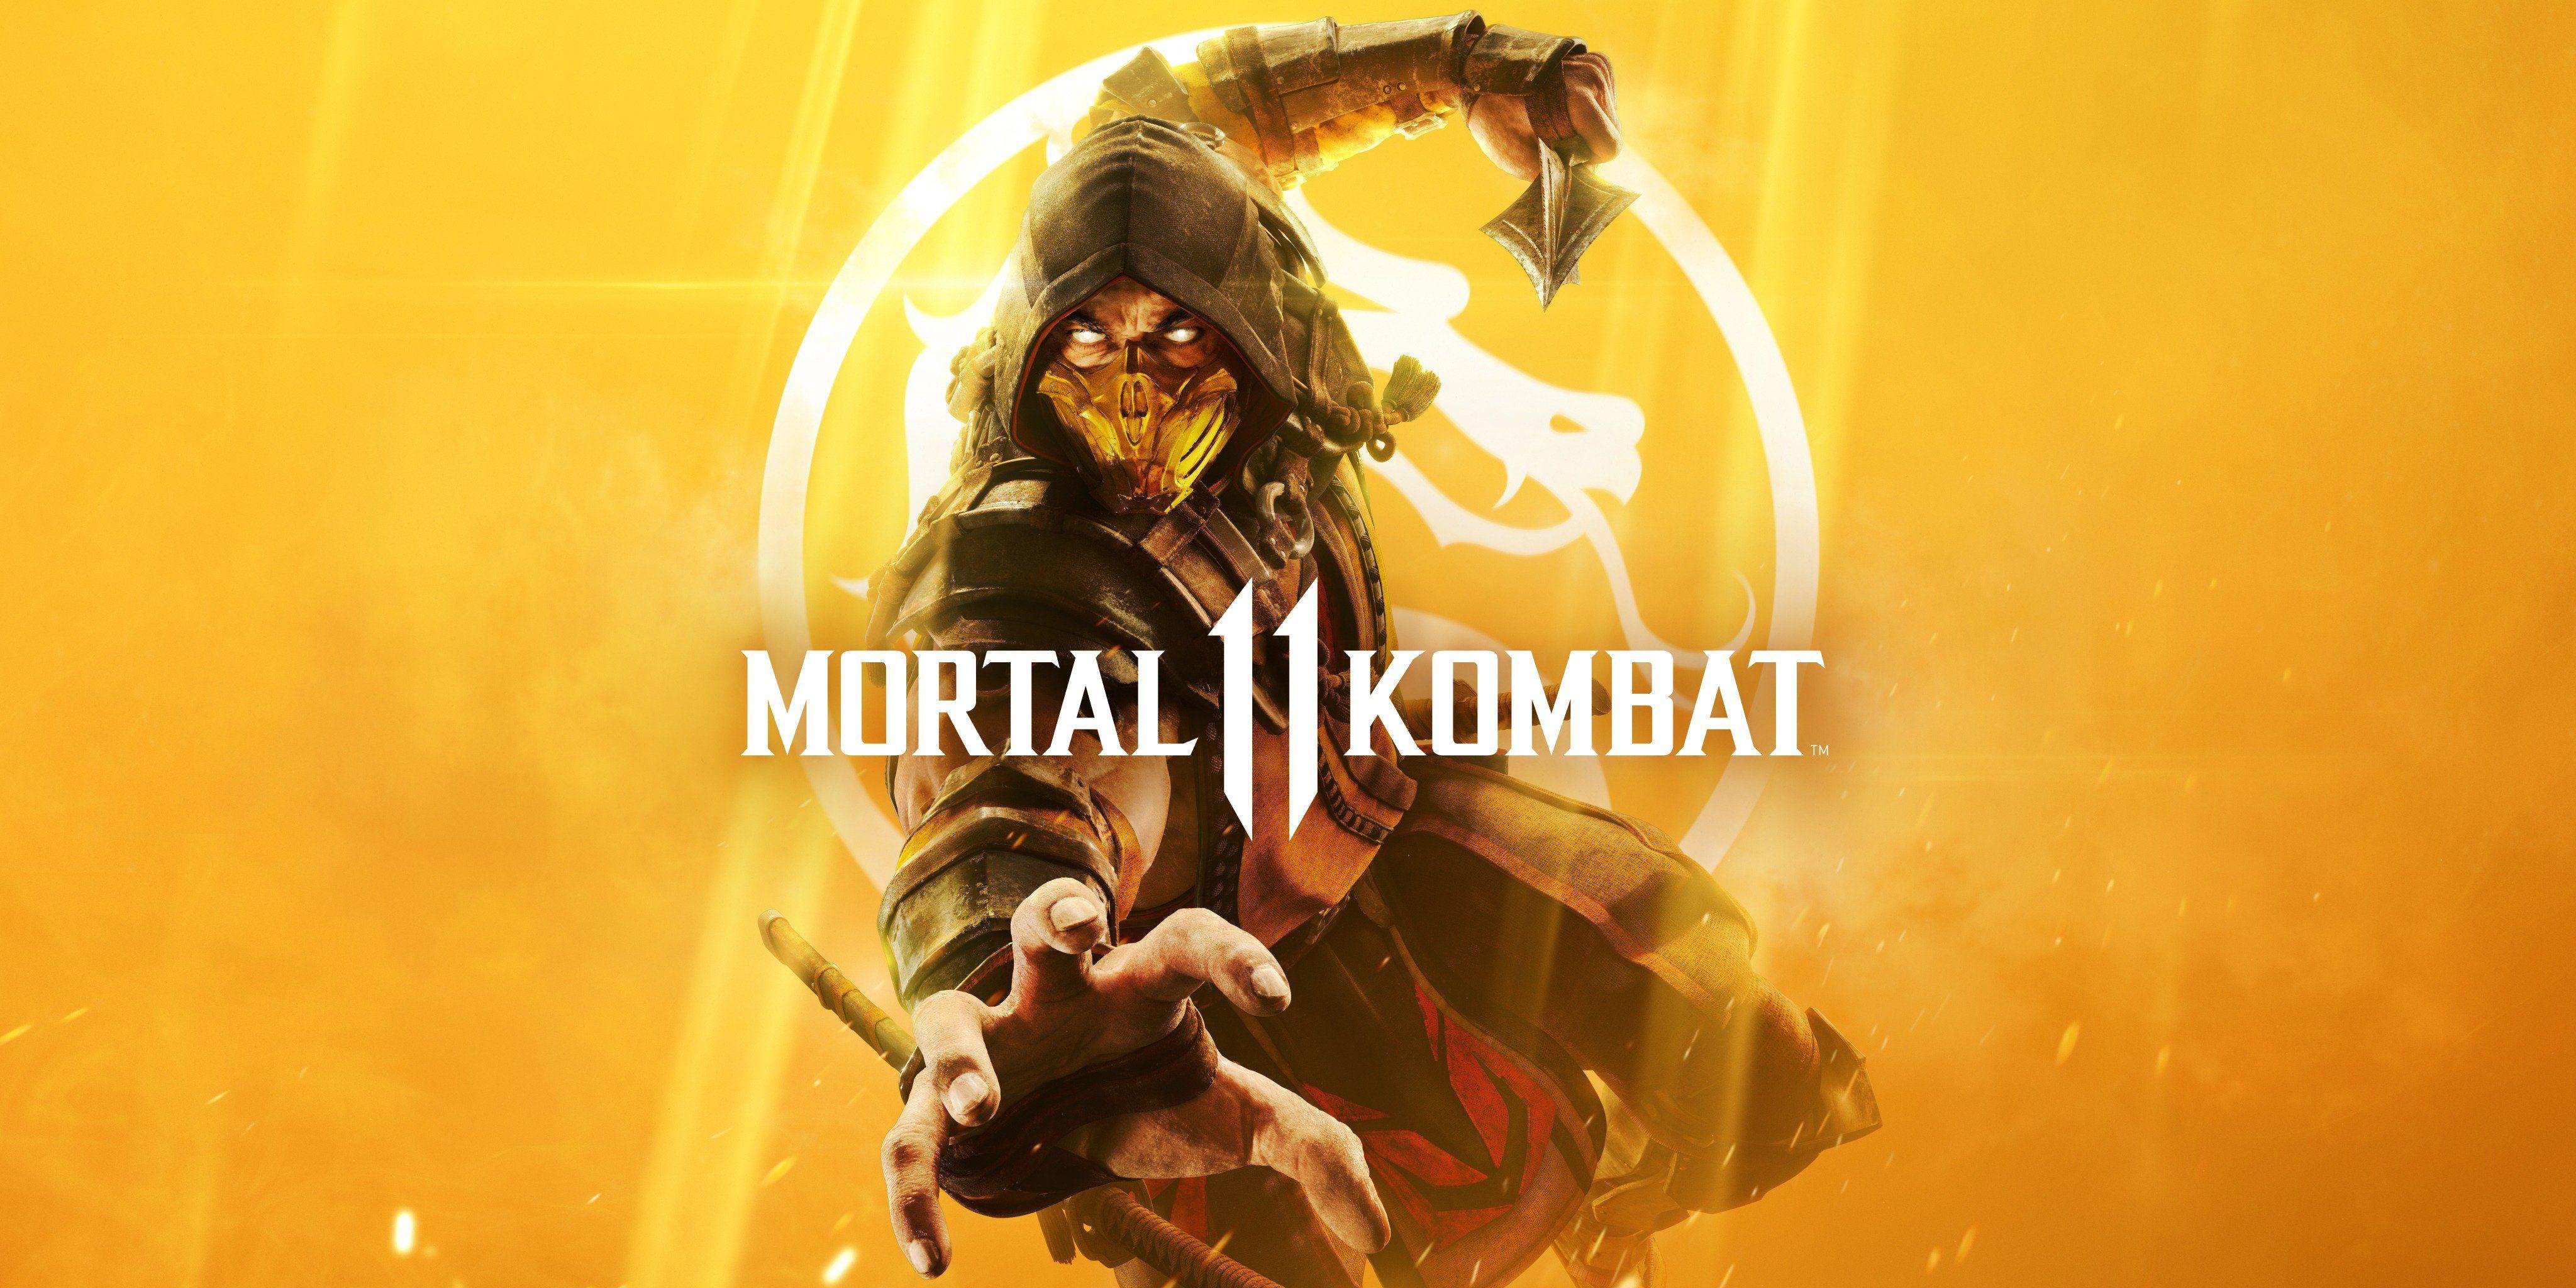 Scorpion (character), #Mortal Kombat, #Mortal Kombat #Mortal